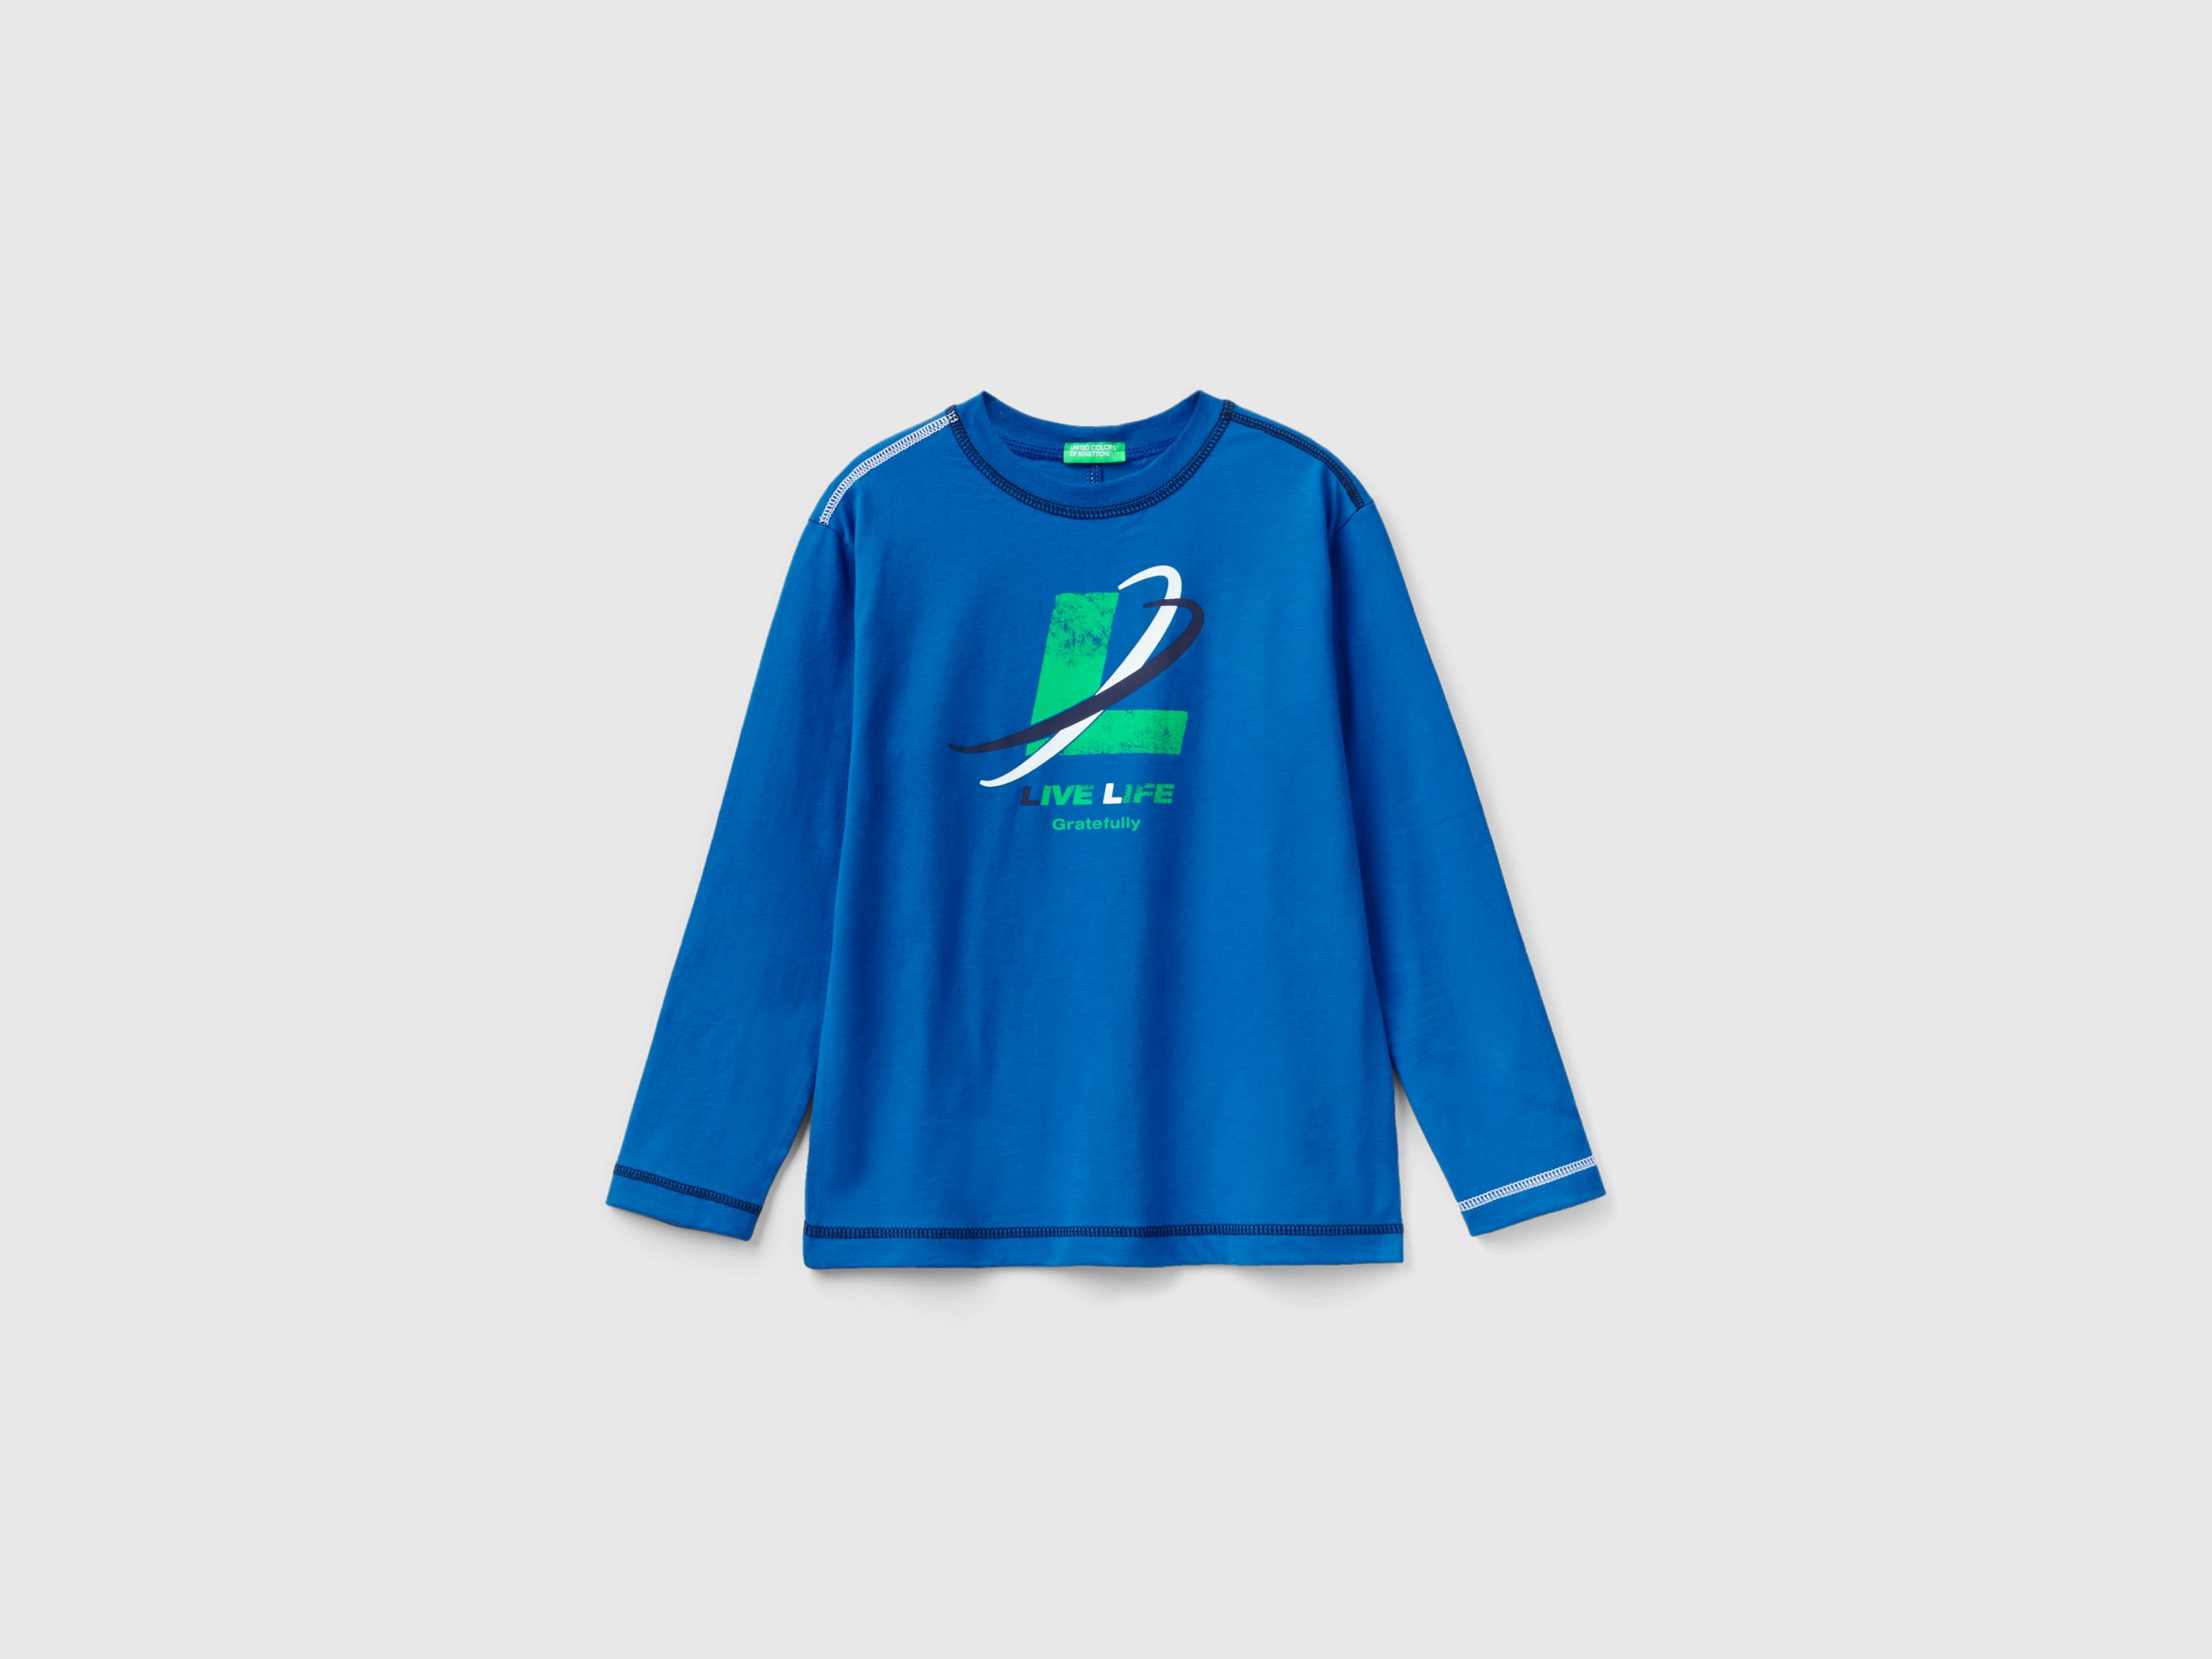 Benetton, T-shirt With Slogan Print, size S, Bright Blue, Kids